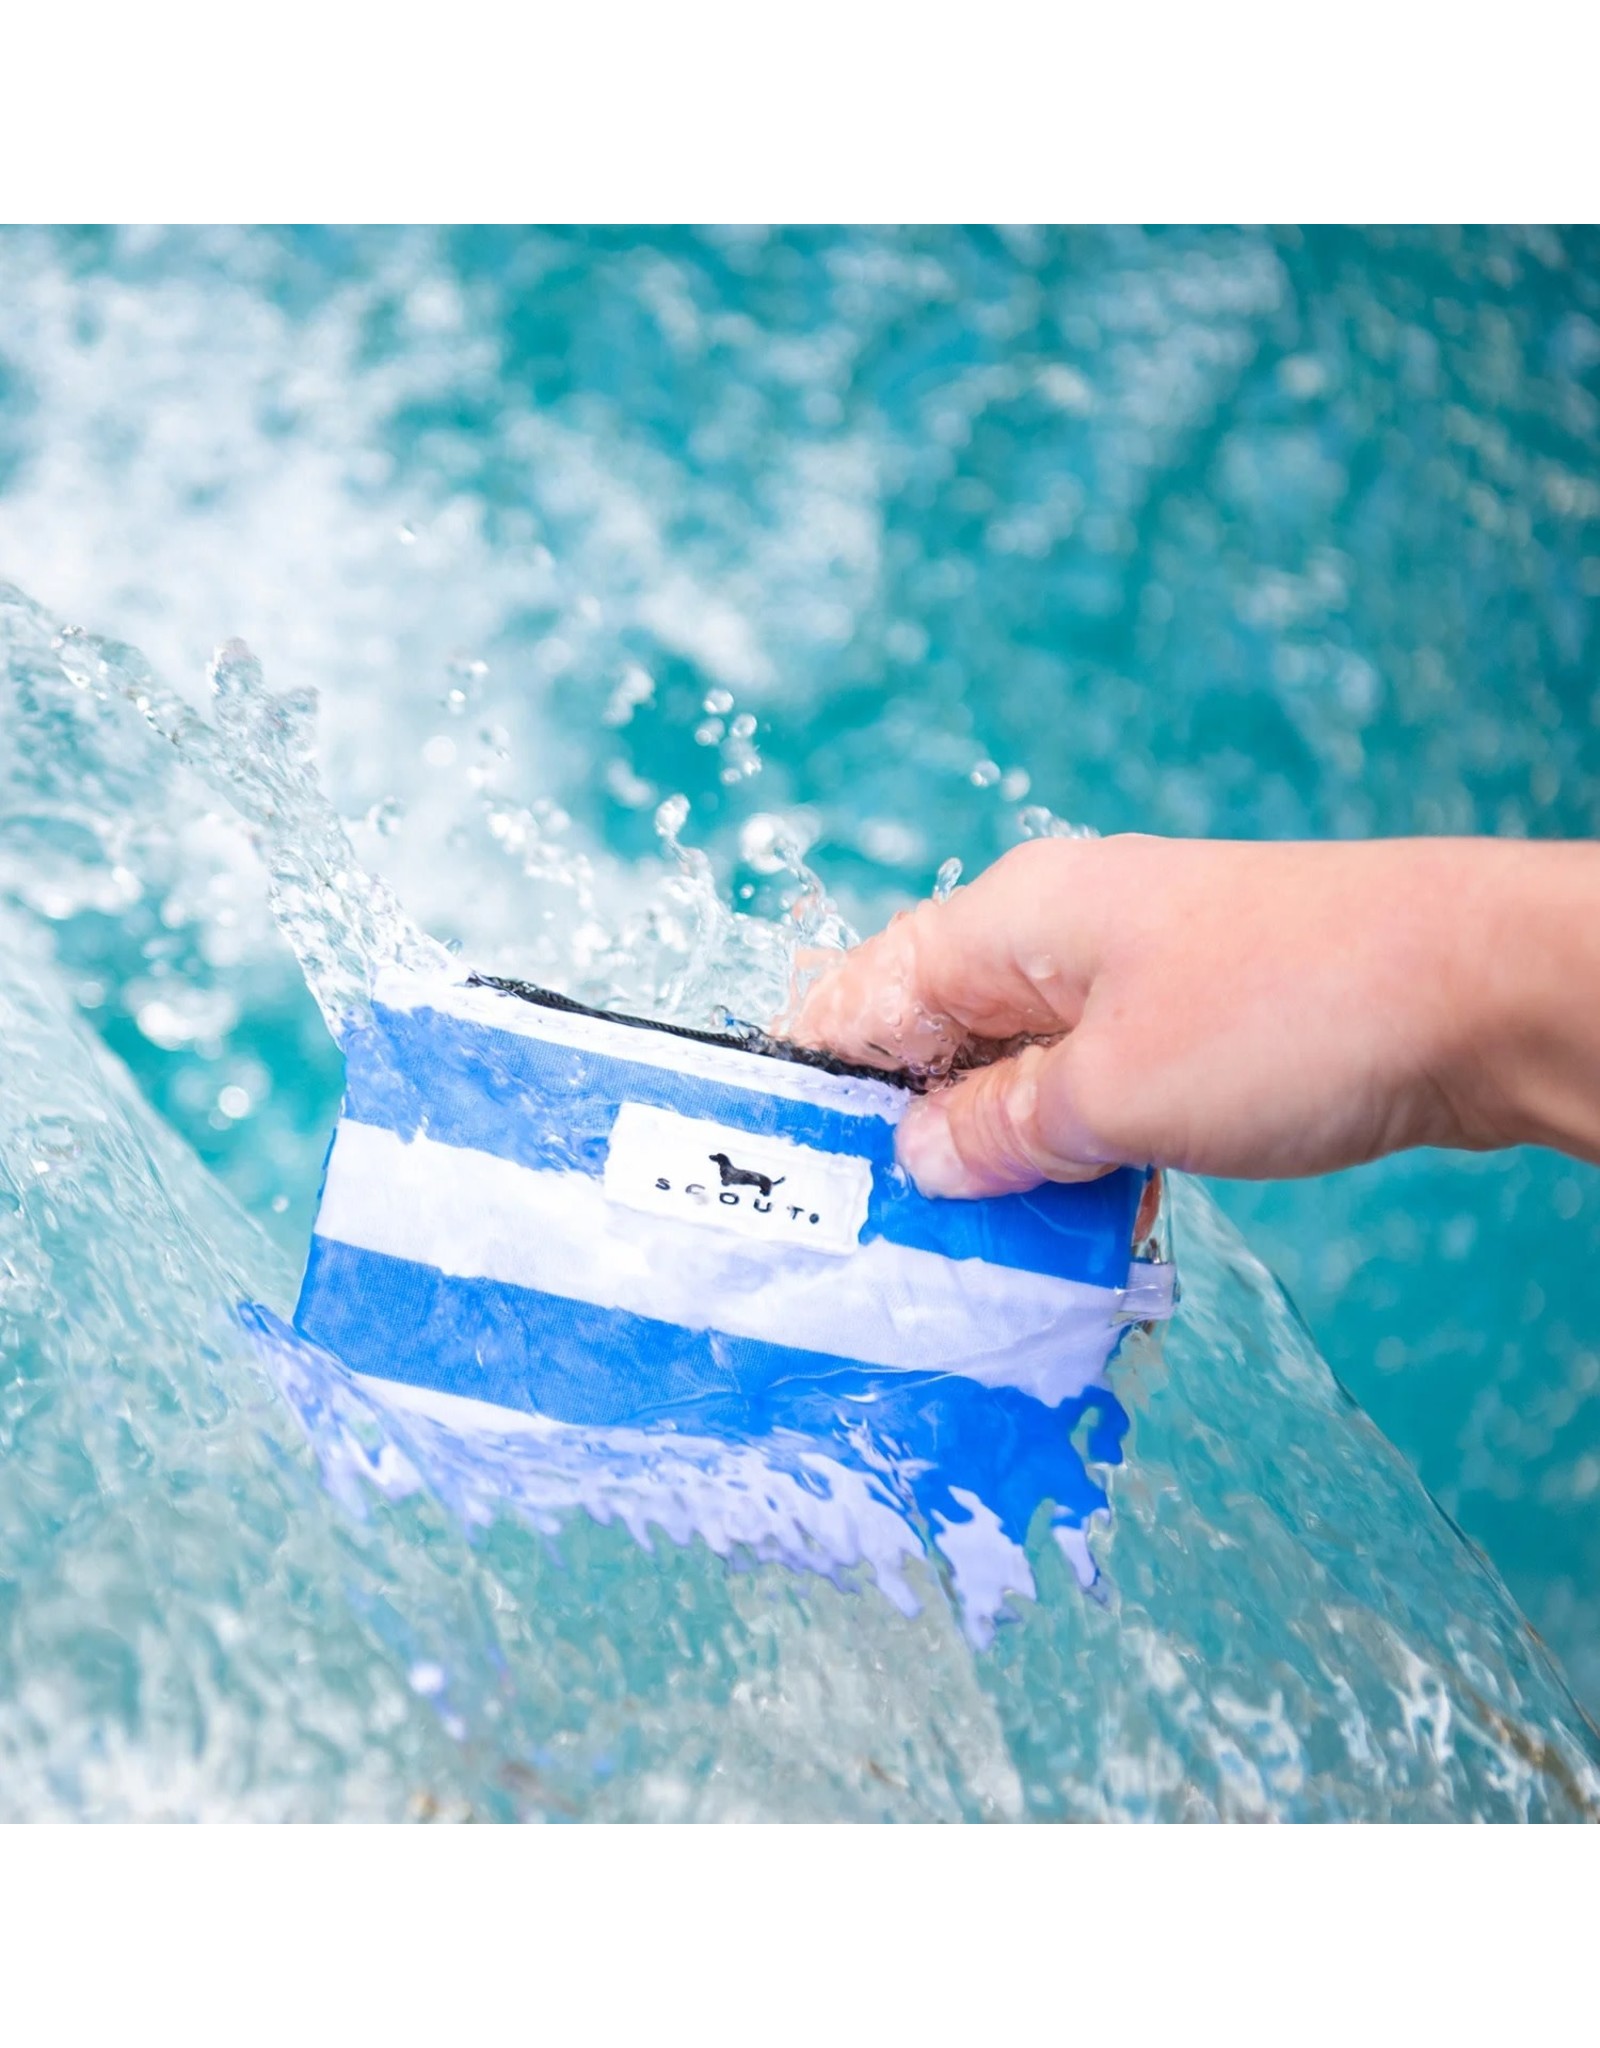 Scout Bags IDKASE Card Holder ID Case In Swim Lane Pattern